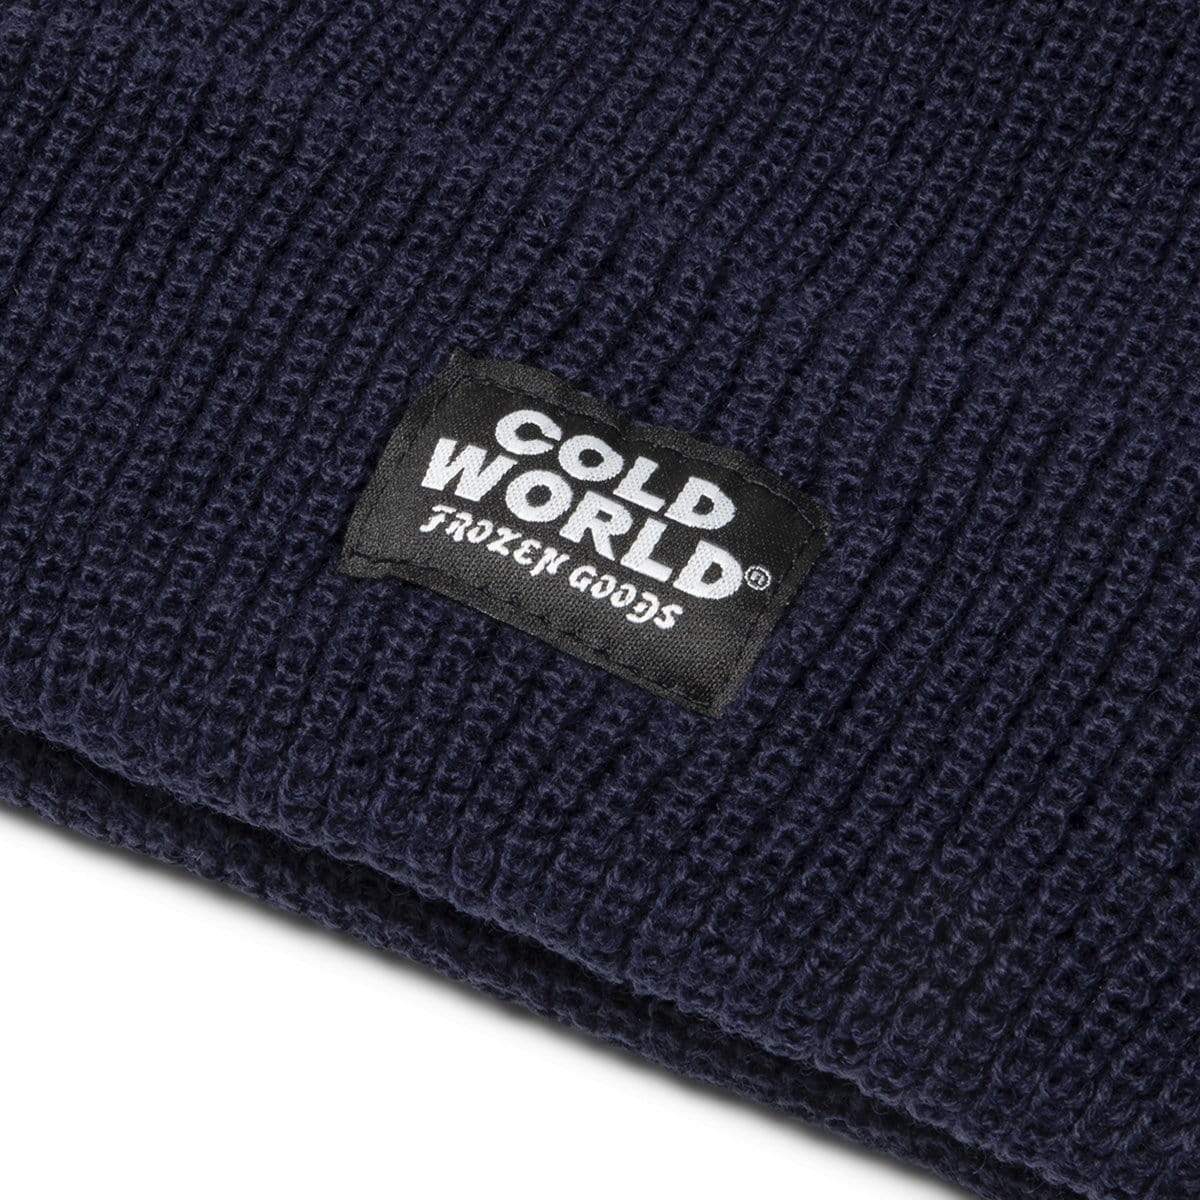 Cold World Frozen Goods Headwear NAVY / OS COLD WORLD KNIT BEANIE